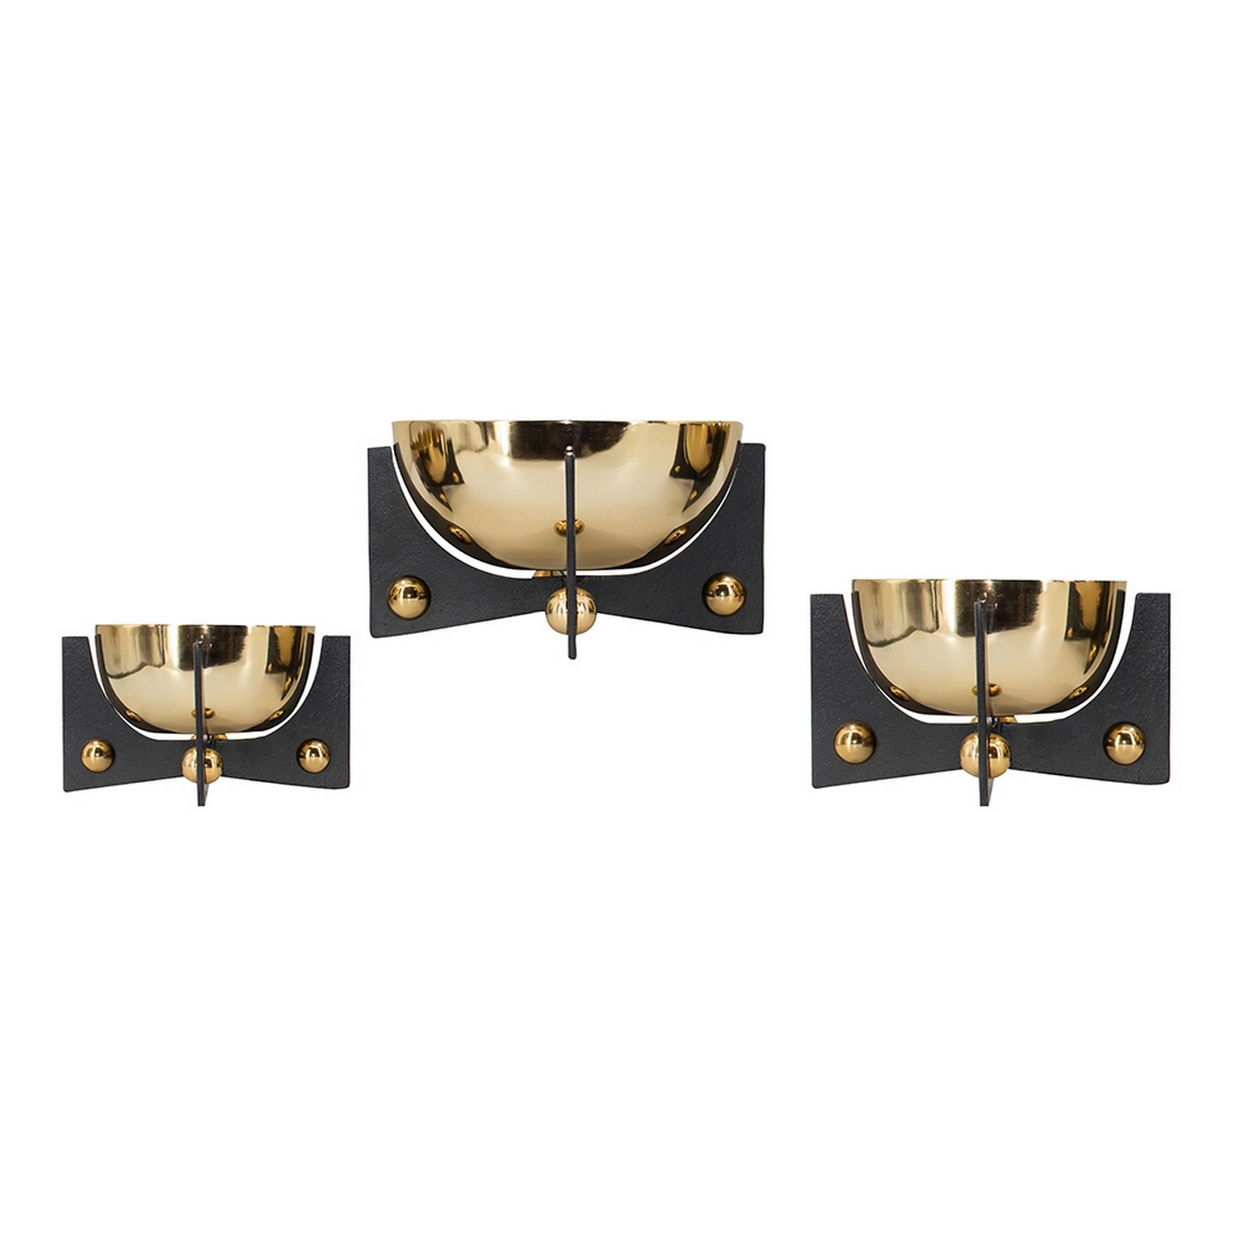 Set Of 3 Aluminum Round Decorative Bowls, Gold Finish, Jet Black Stand- Saltoro Sherpi